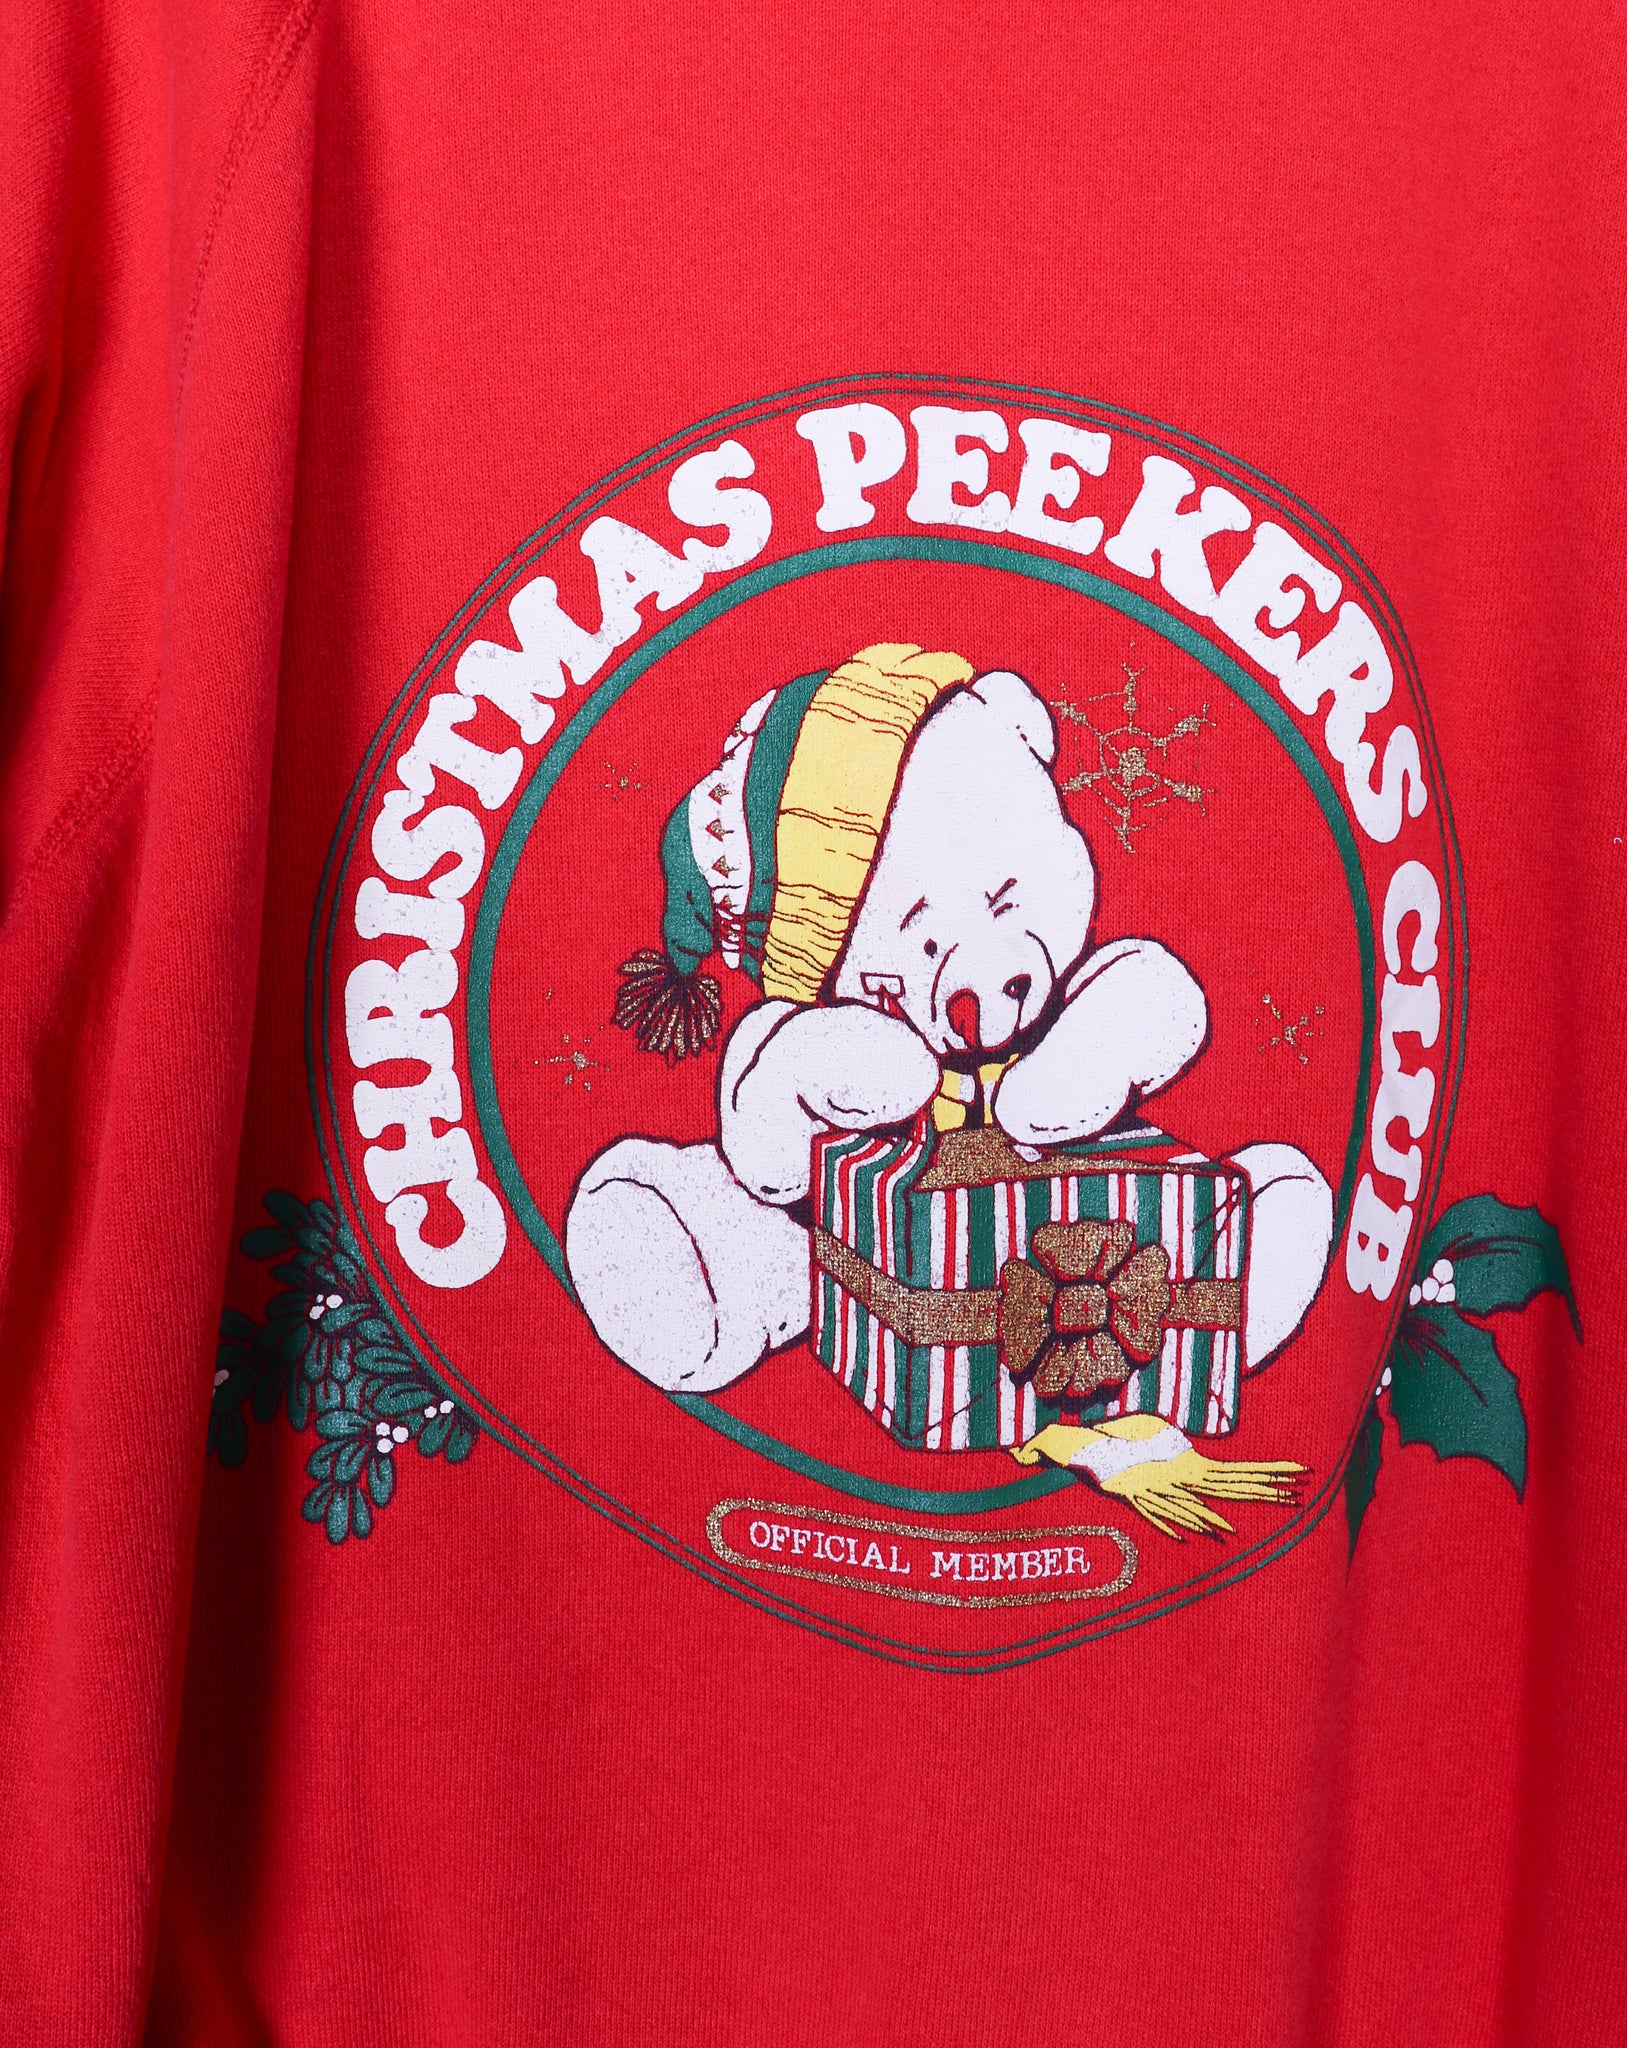 80s Ultra Sweats "Christmas Peekers Club" Crewneck